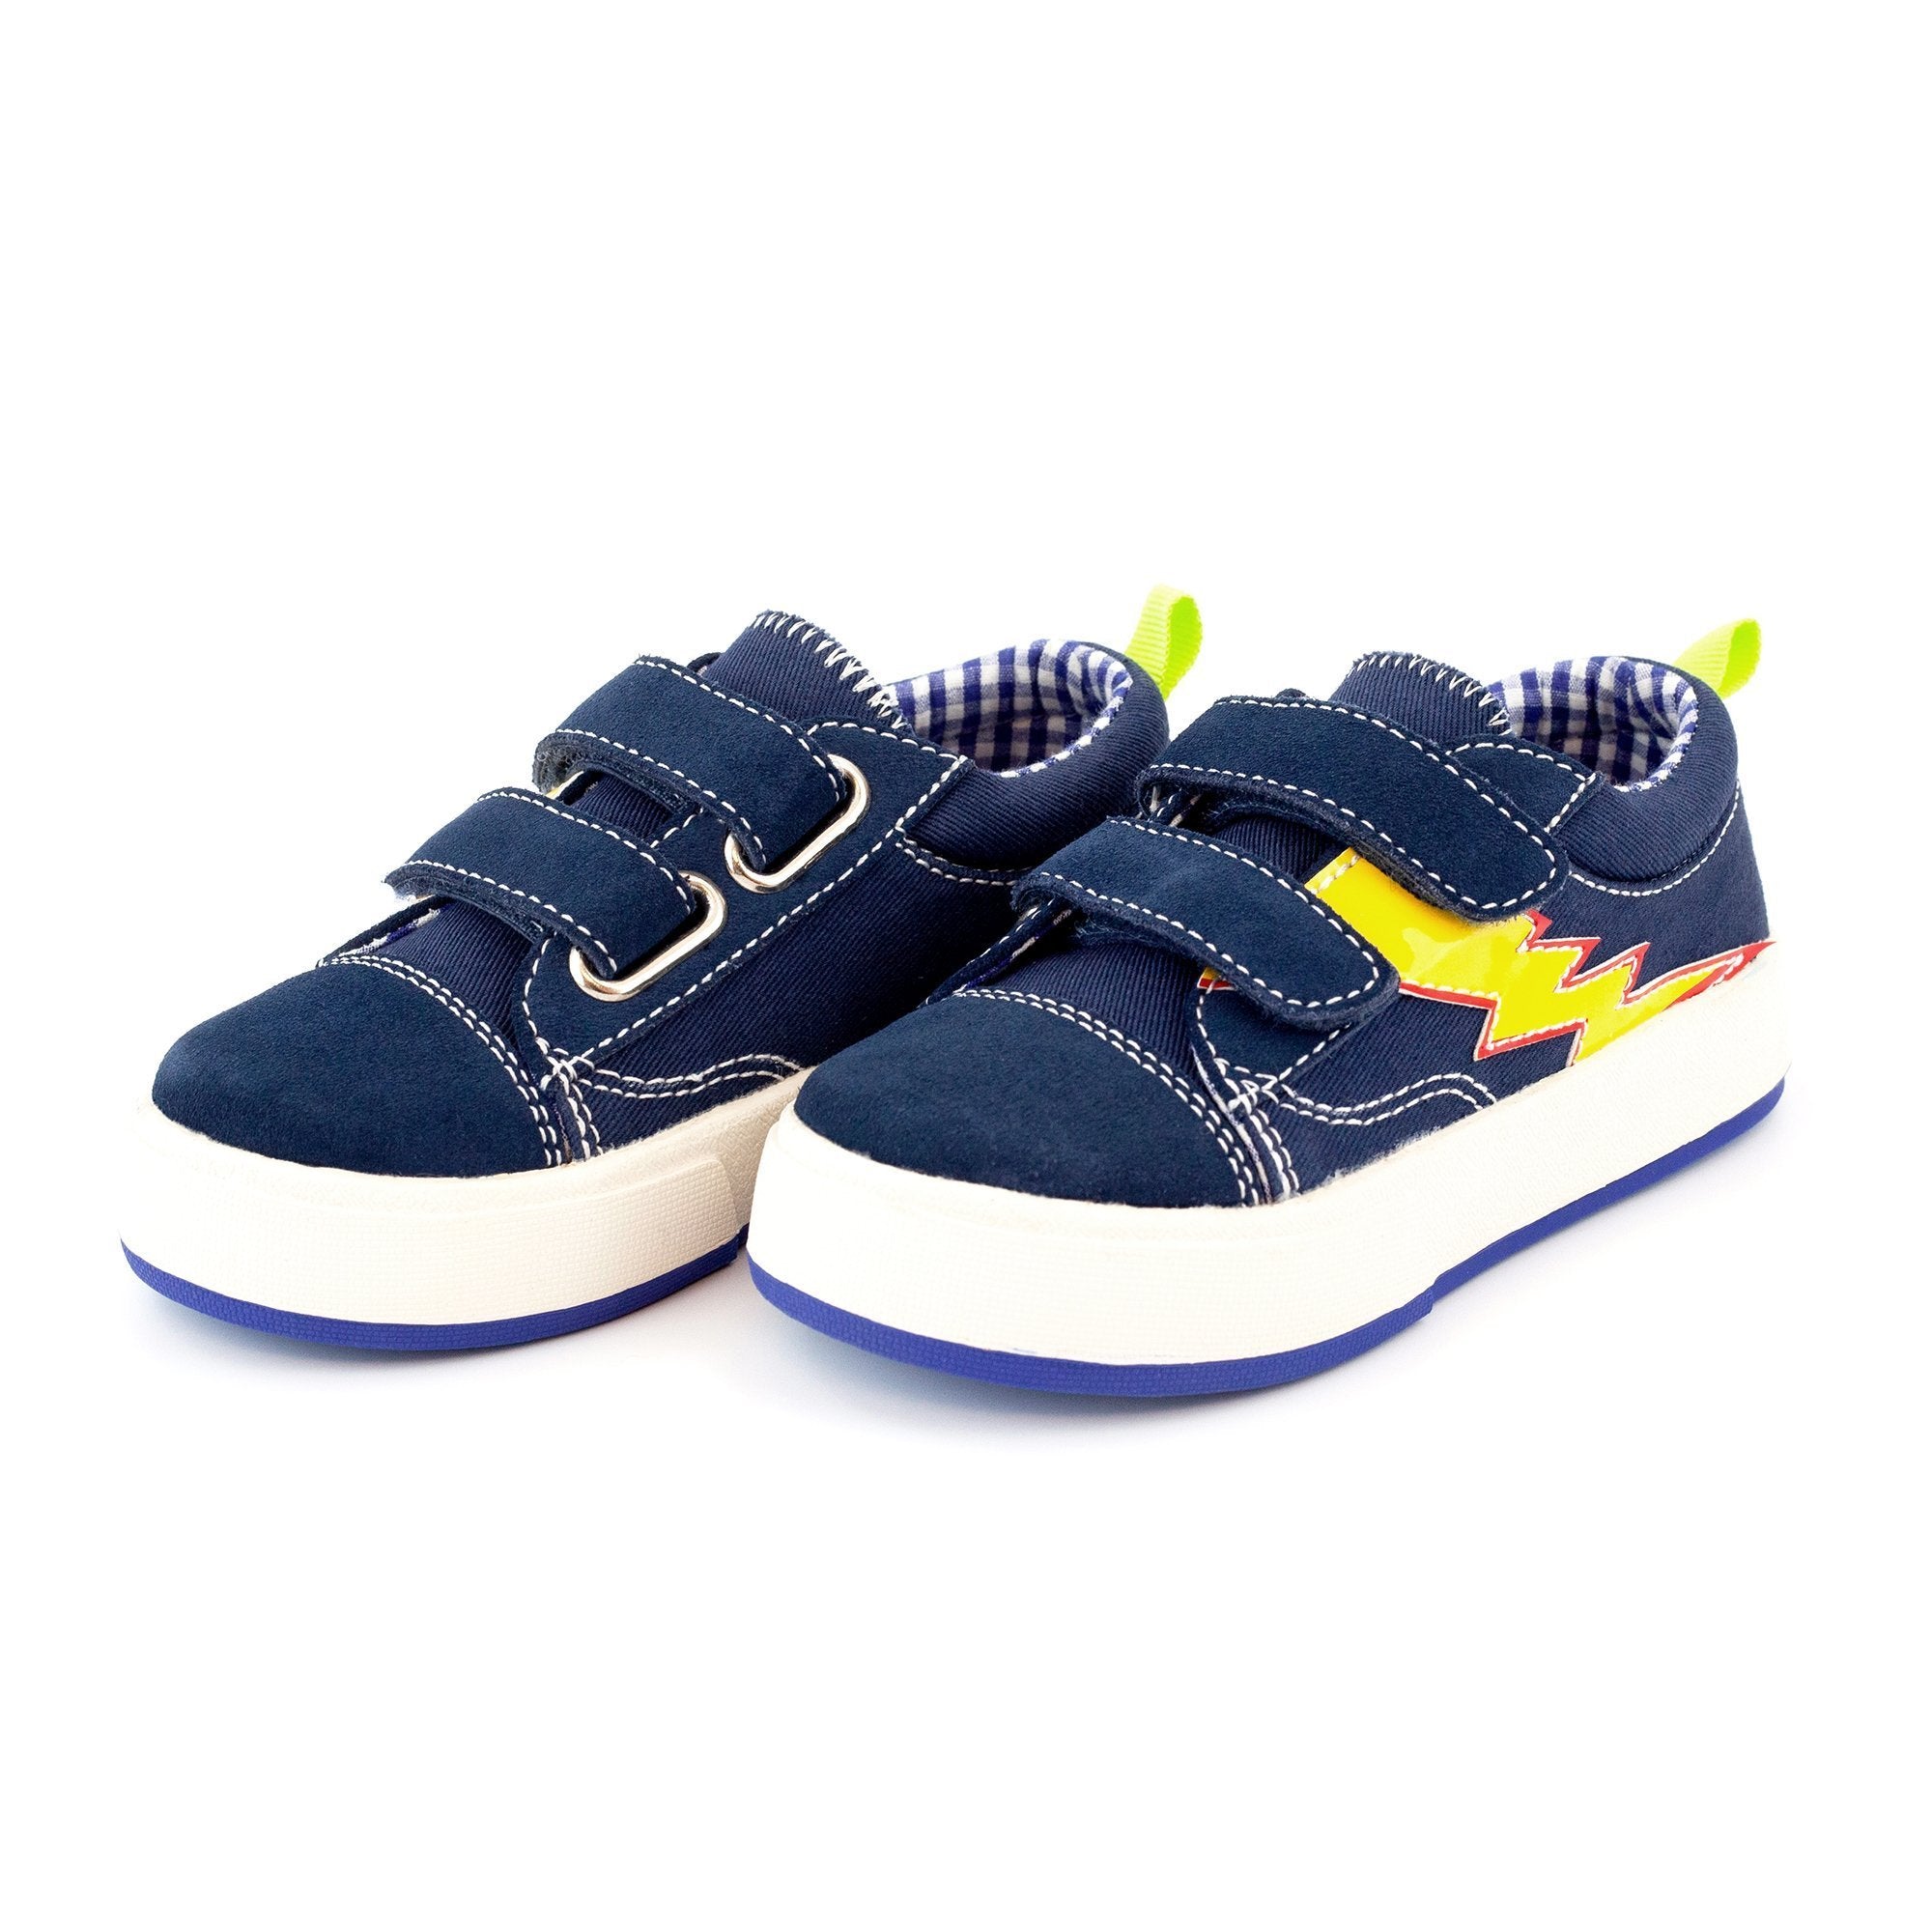 Zutano Shoe Archie Flame Double V Kids Shoe